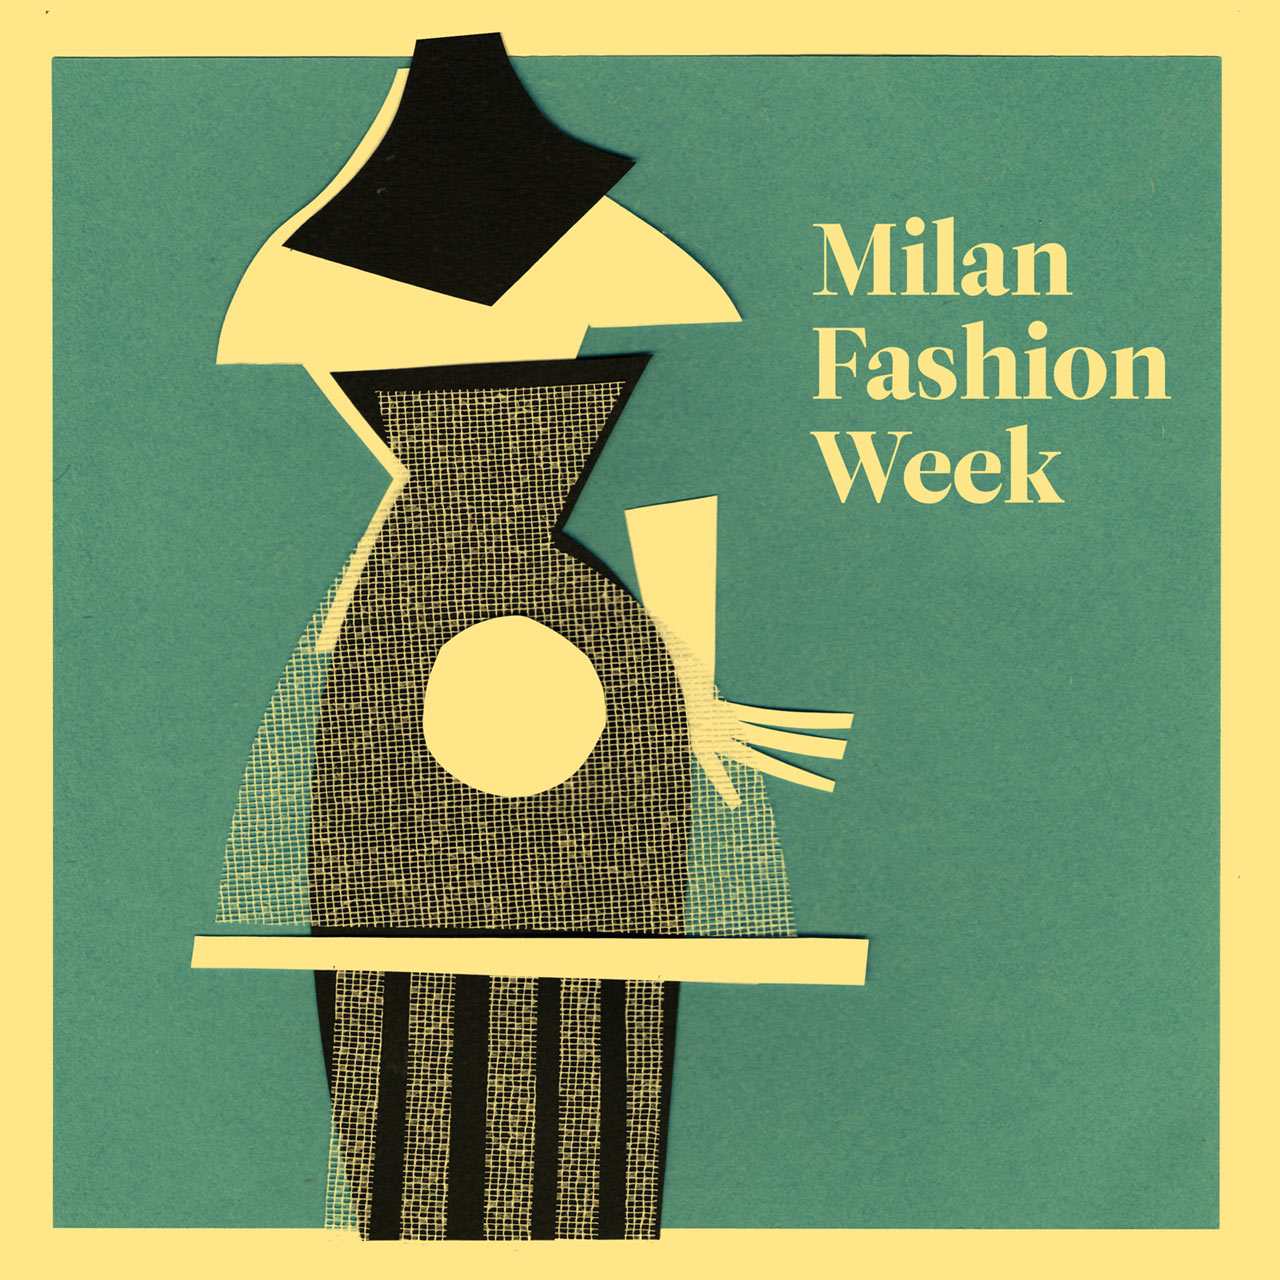 Gio Pastori - Milan Fashion Week for AMICA © Courtesy of the artist